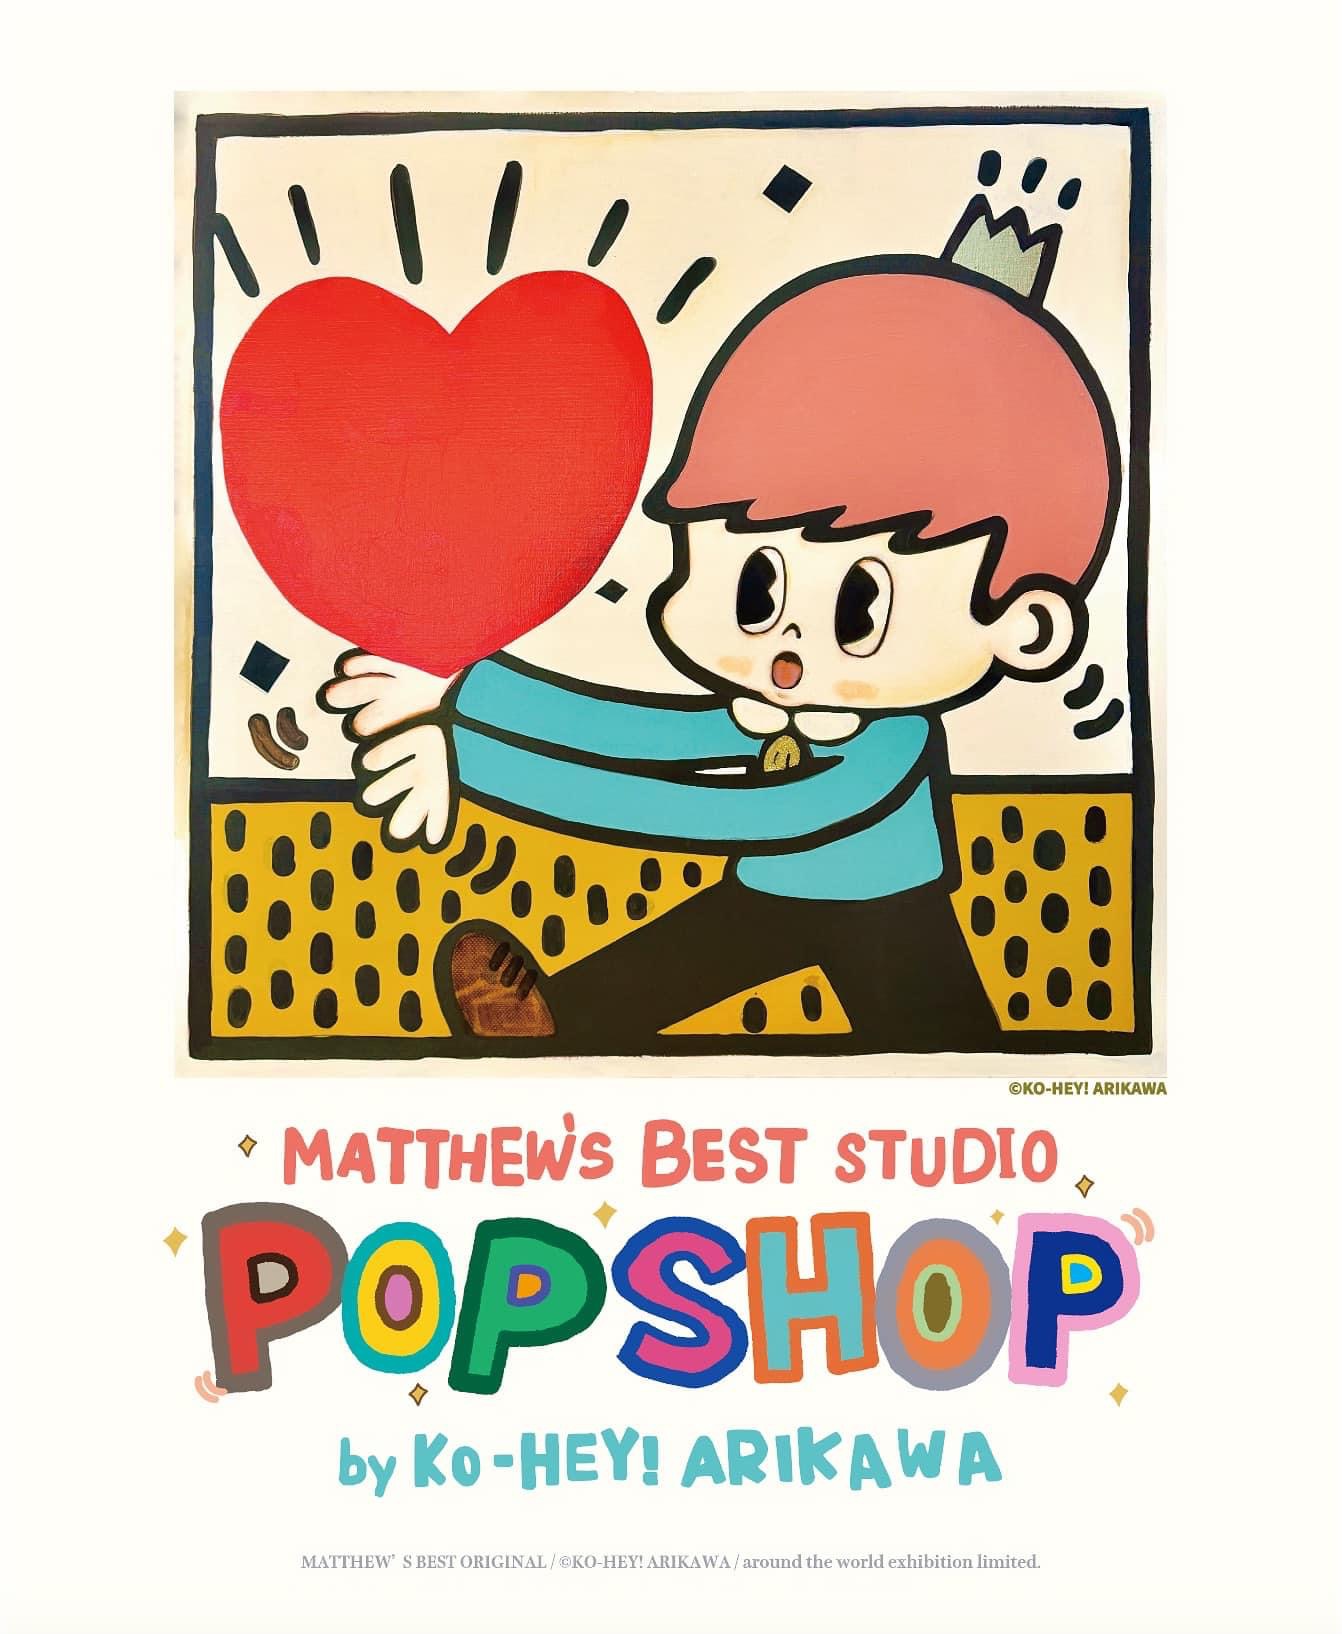 MATTHEW’S BEST STUDIO  “POP SHOP” by KO-HEY! ARIKAWA